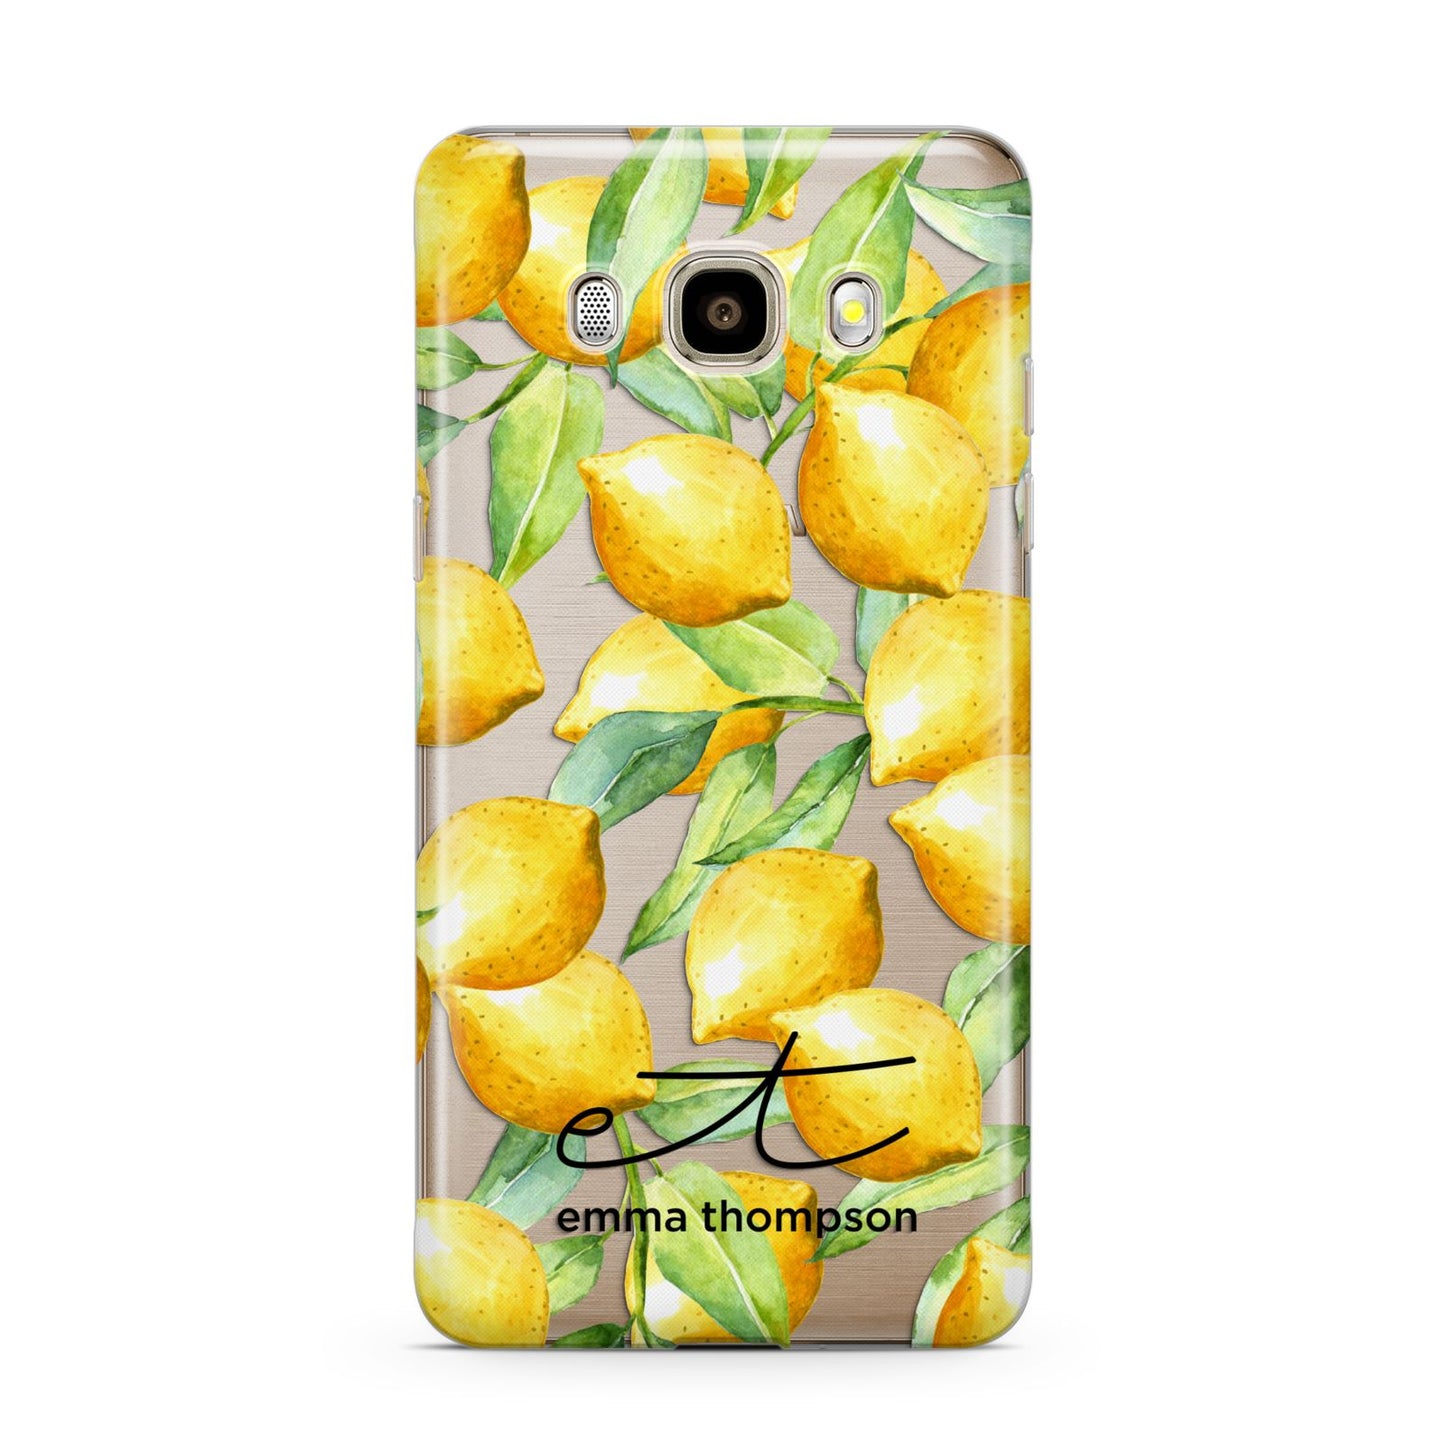 Personalised Lemons of Capri Samsung Galaxy J7 2016 Case on gold phone